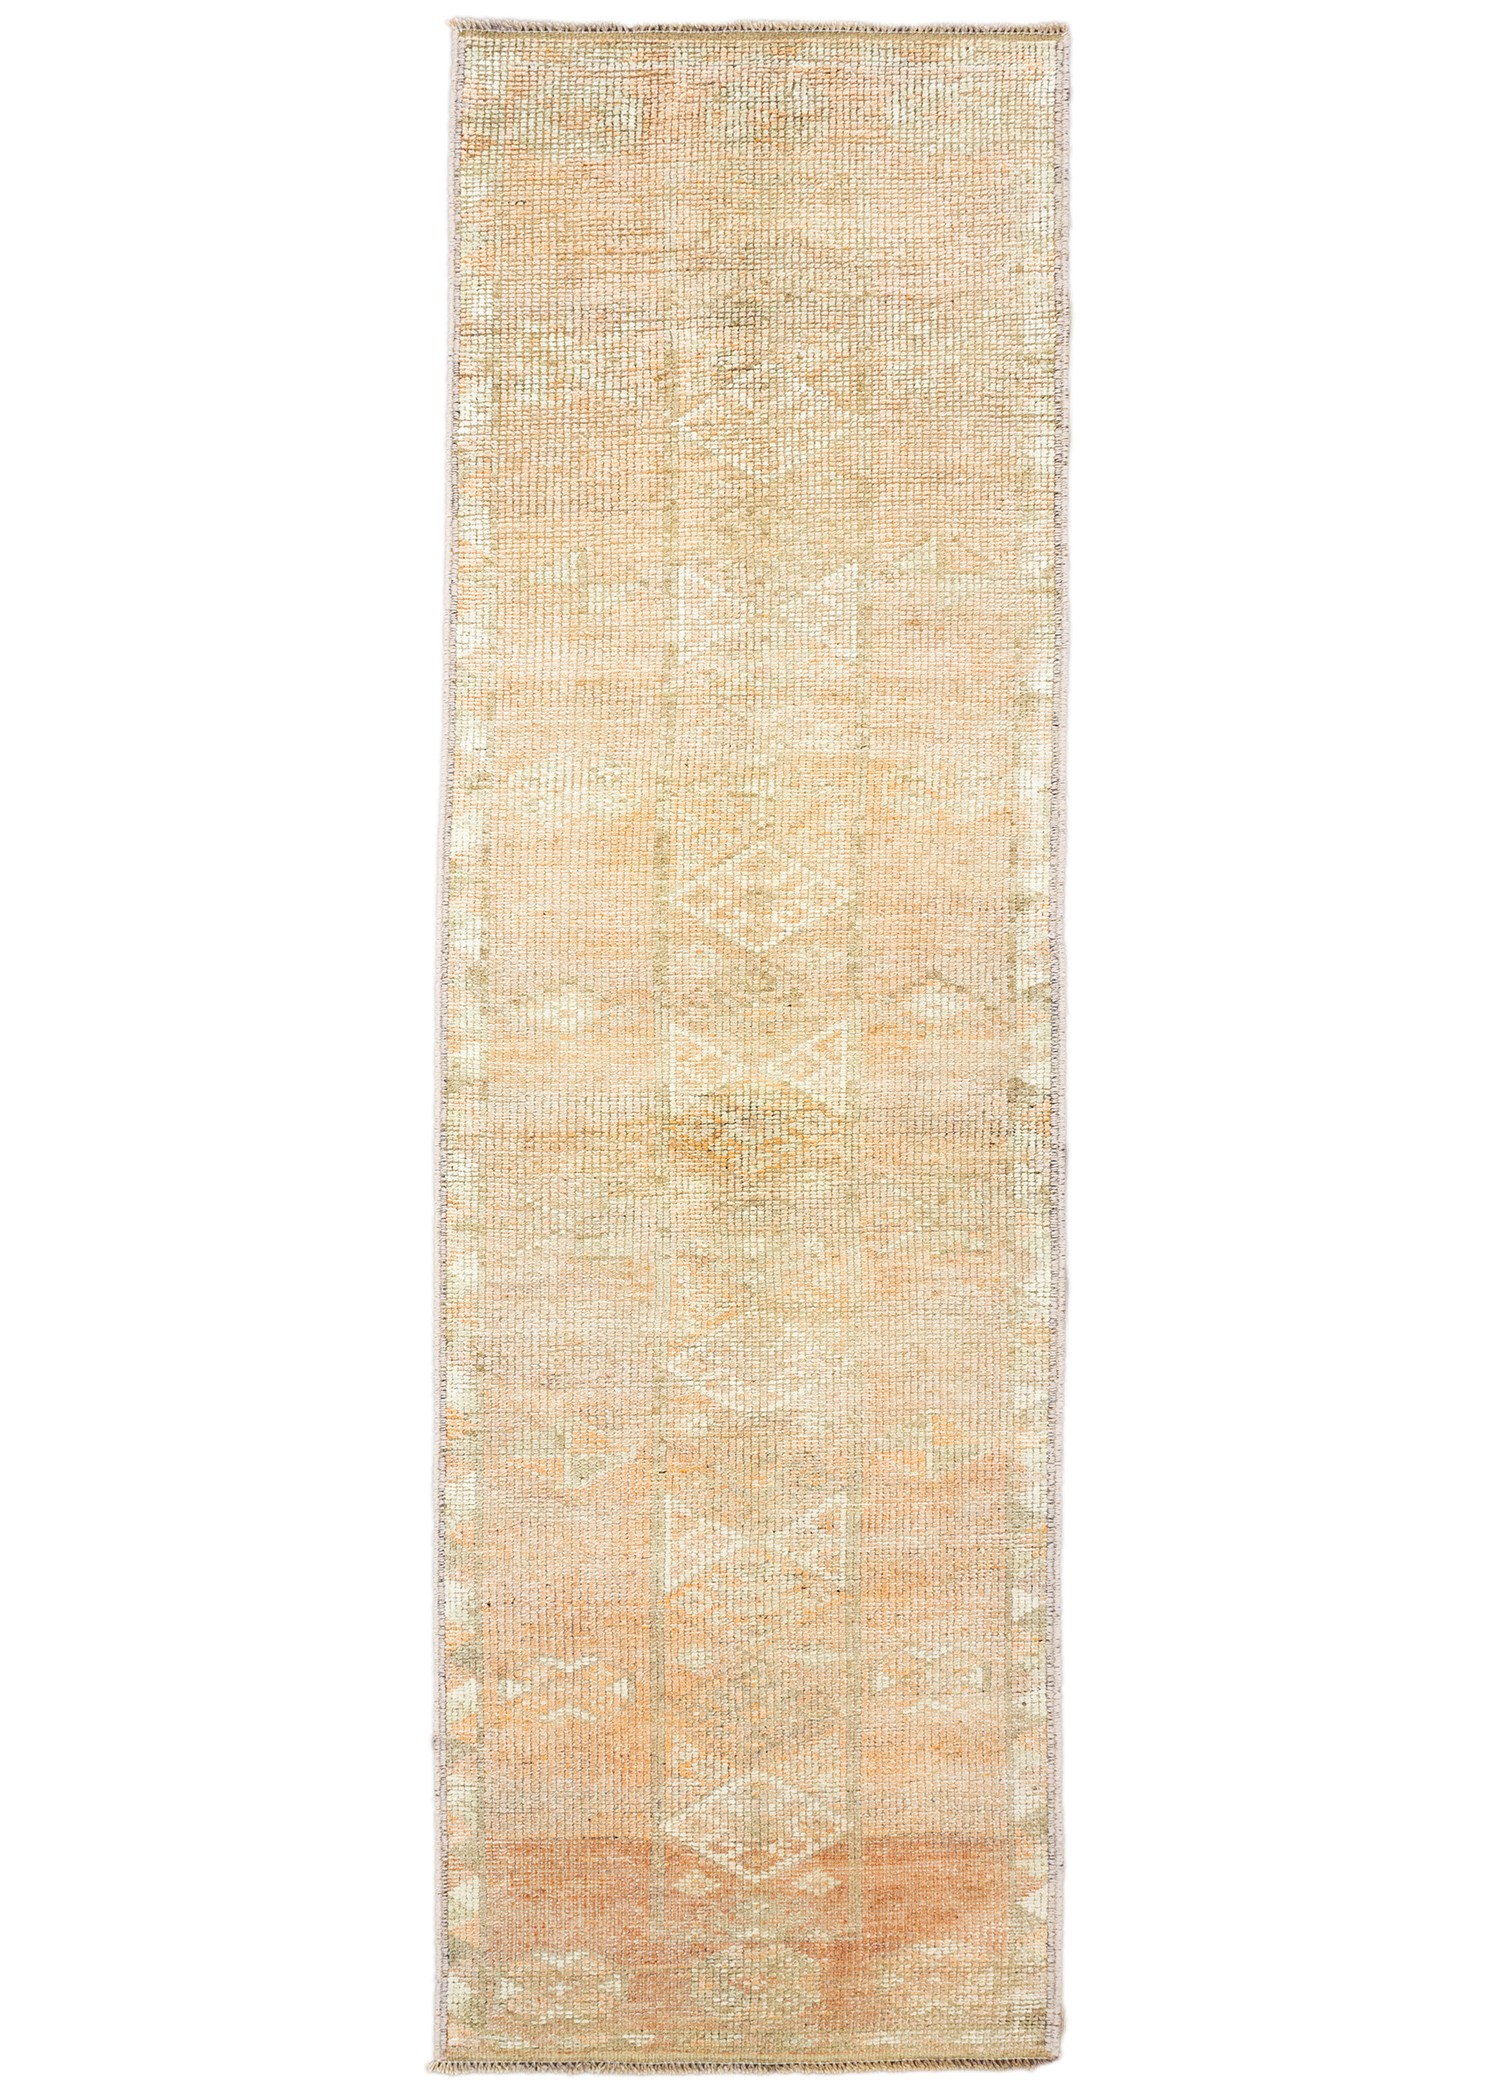 Arin El Dokuma Pastel Turuncu Herki Yolluk 85x335 cm